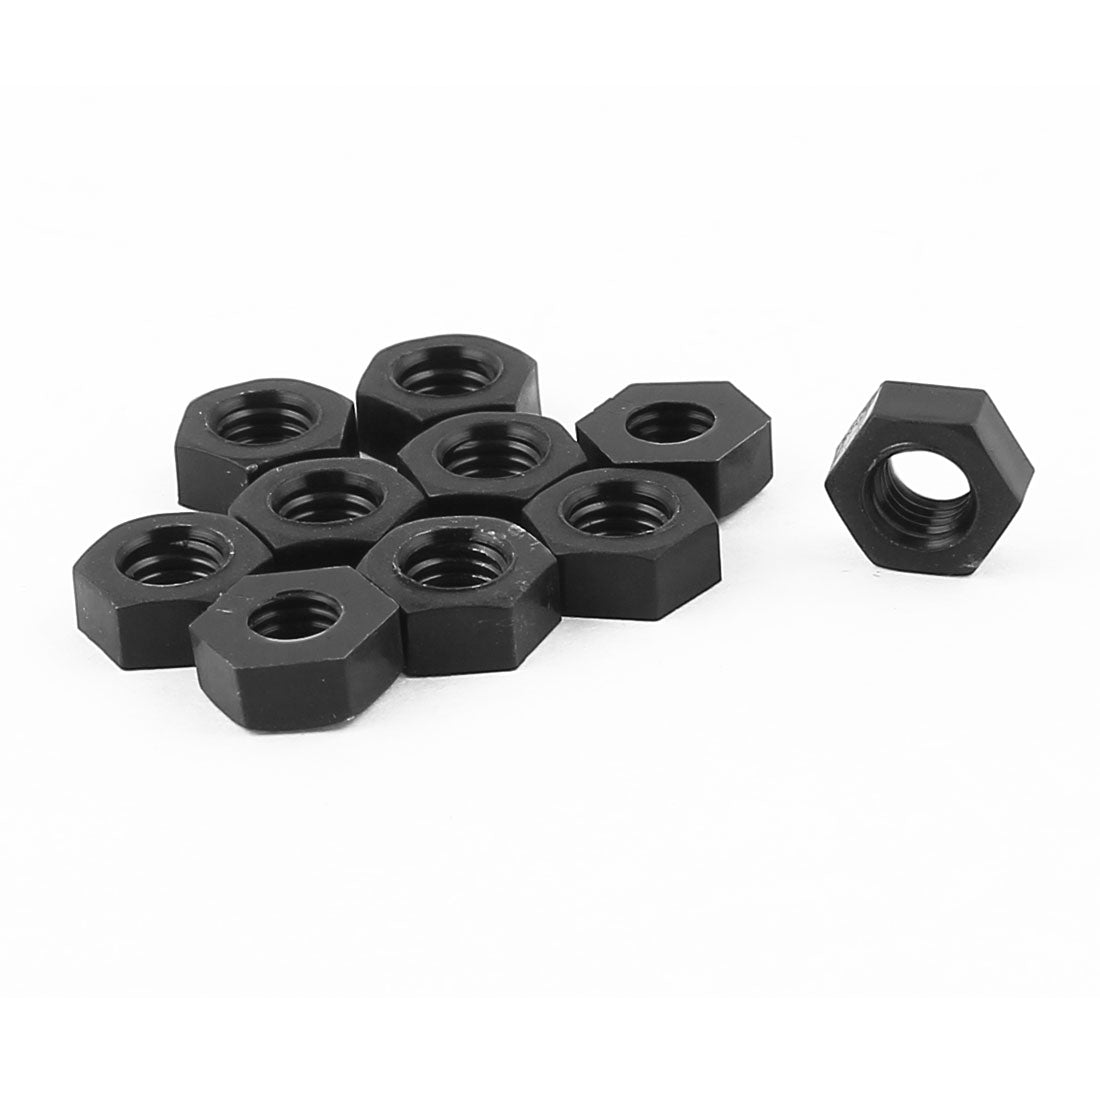 Uxcell Uxcell 10 Pcs Pack Of Metric M5 Insert Lock Nylon Full Hex Nuts Plastic Black